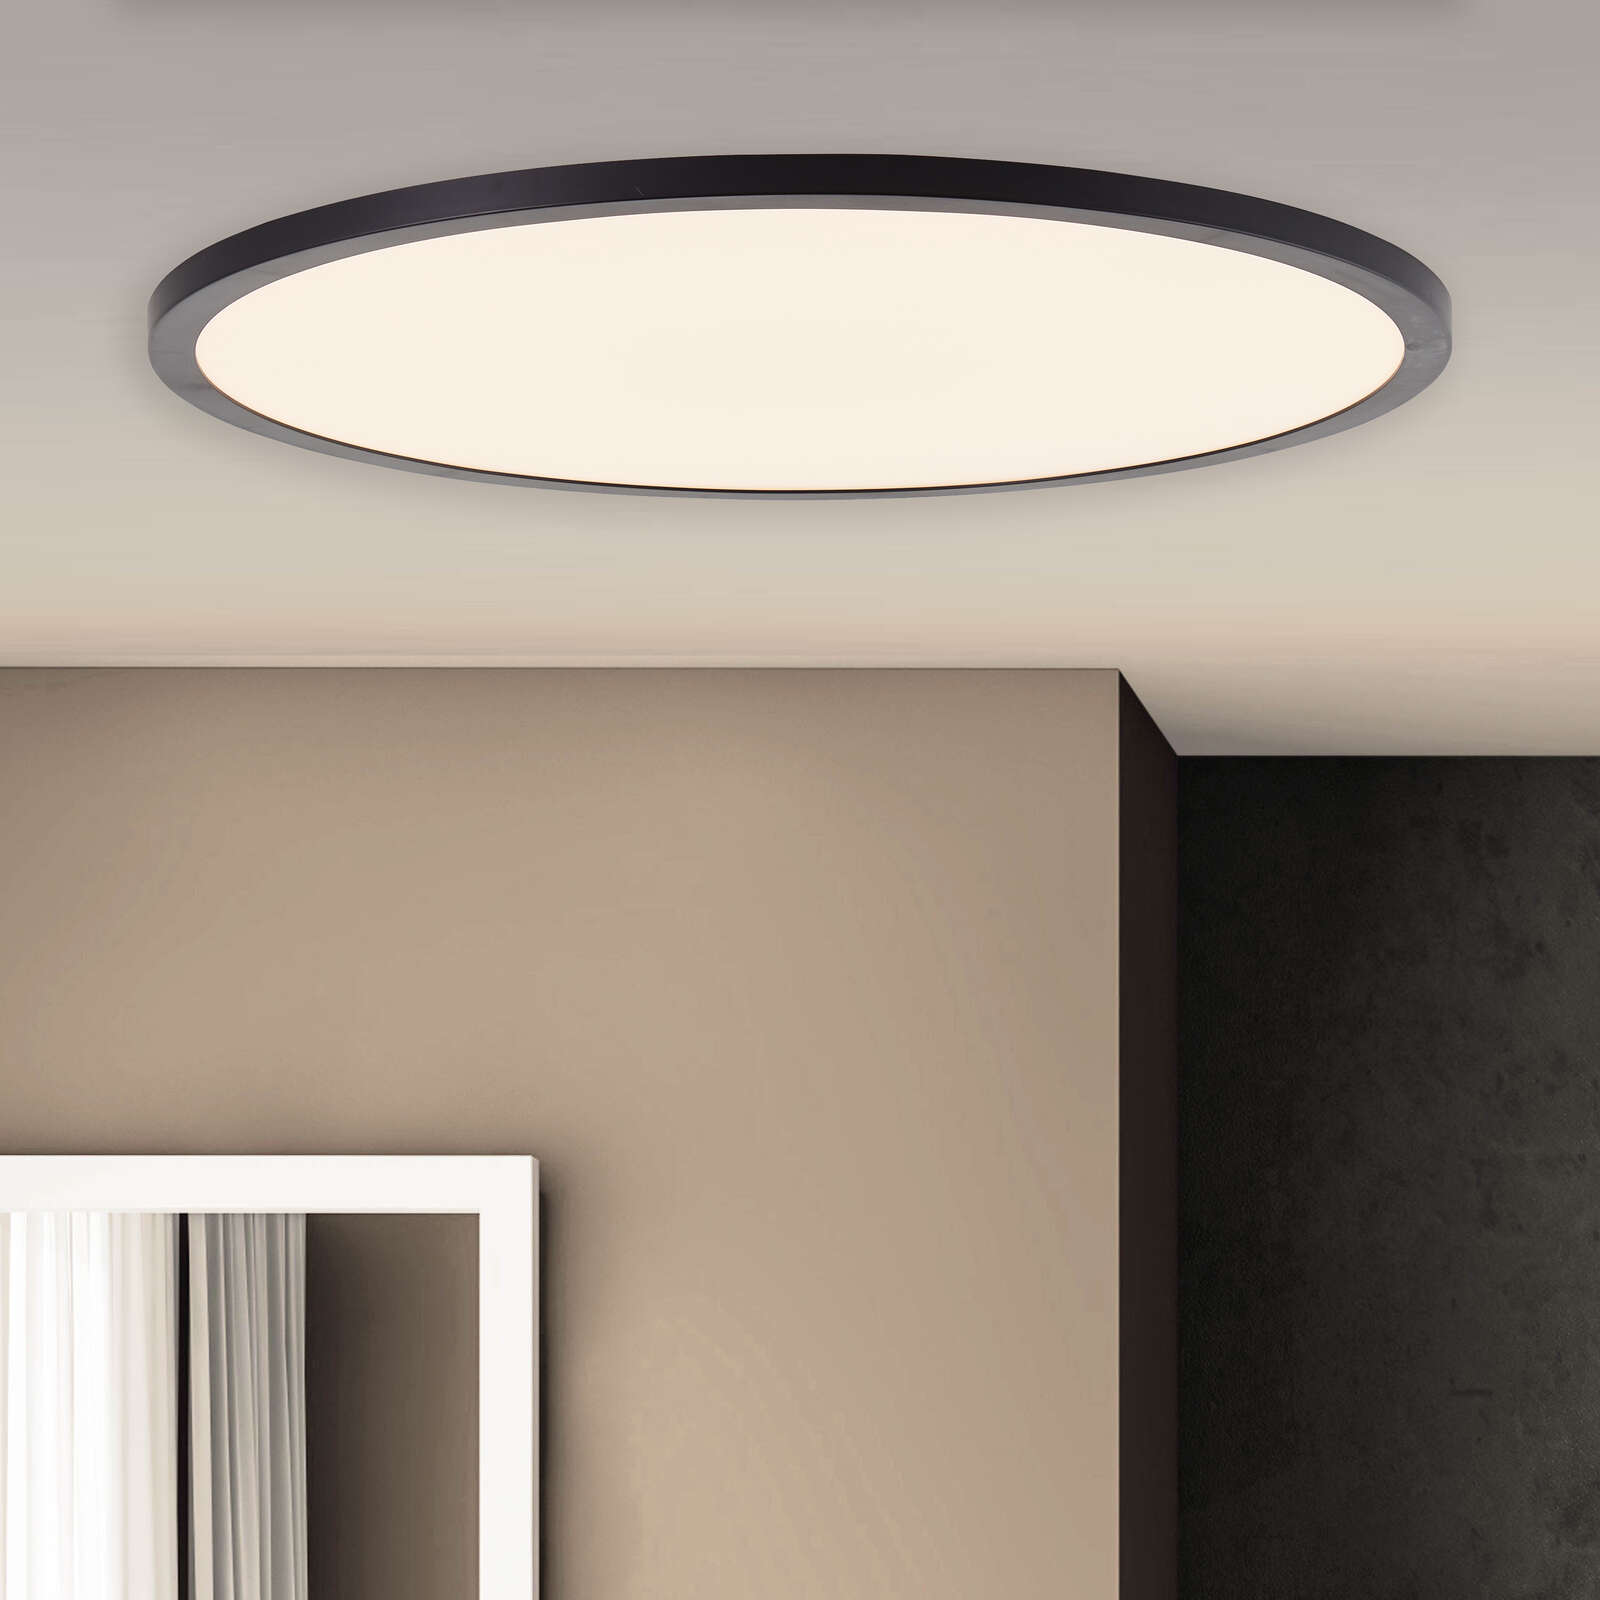             Kunststof plafondlamp - Selina - Zwart
        